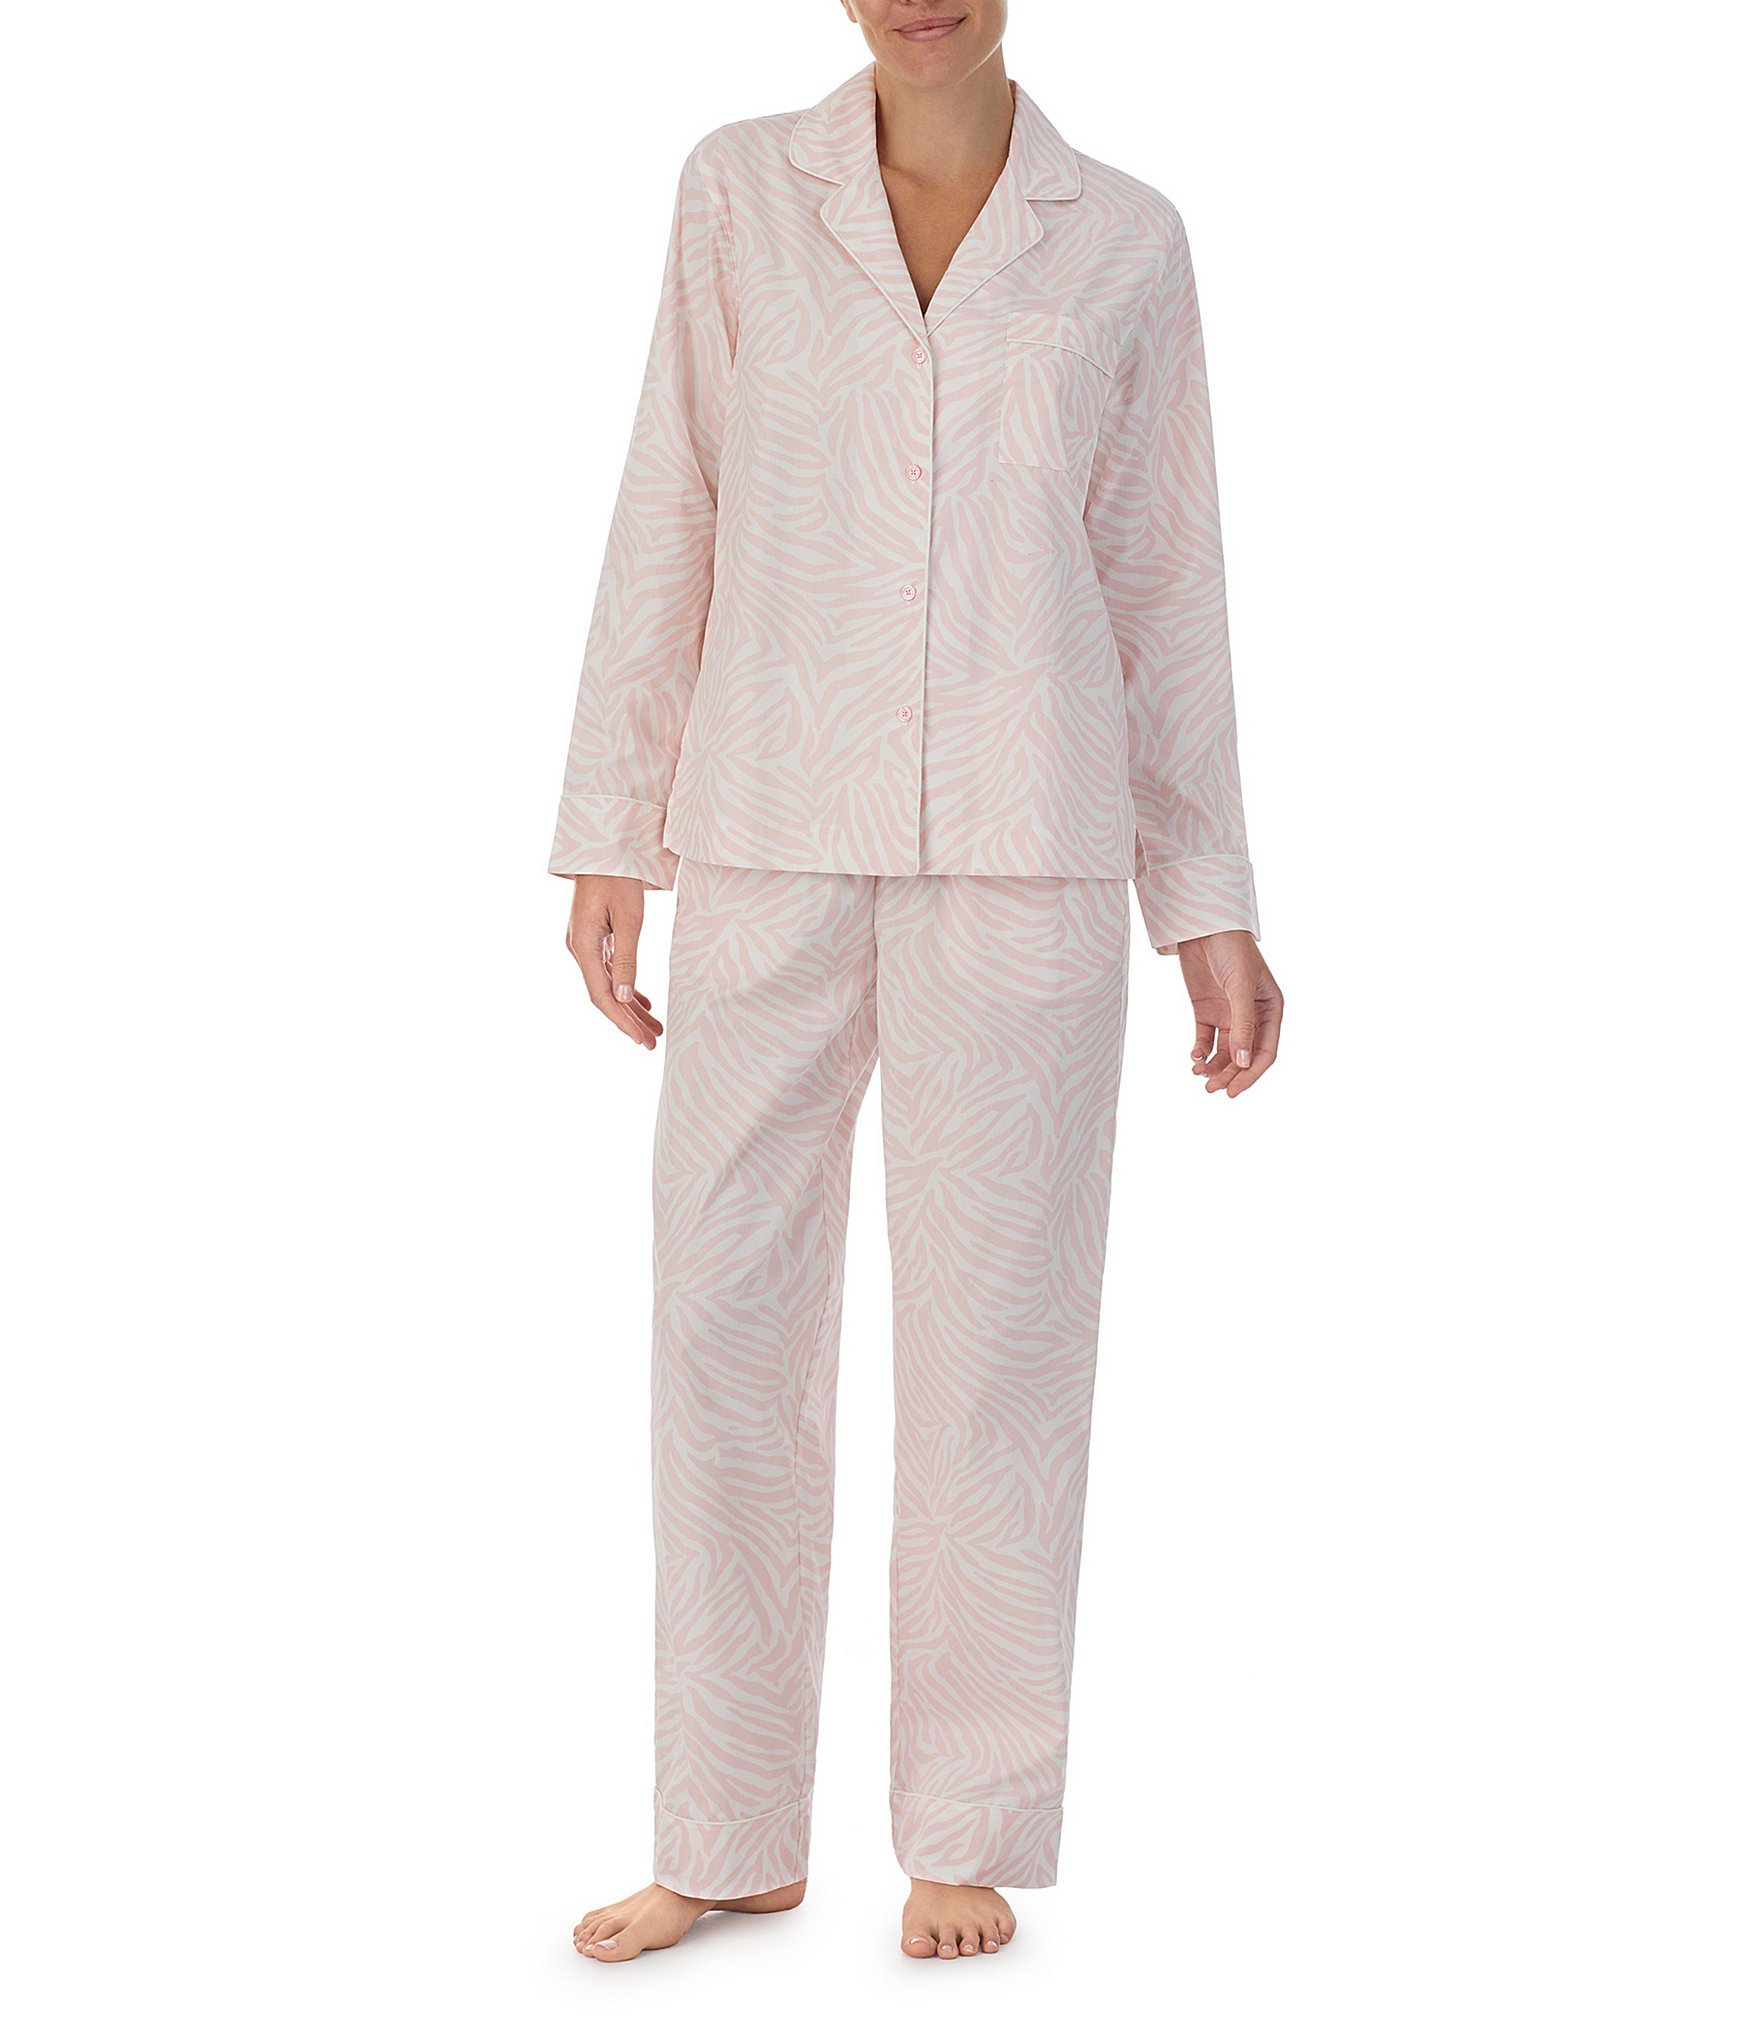 kate spade sale: Women's Pajamas & Sleepwear | Dillard's